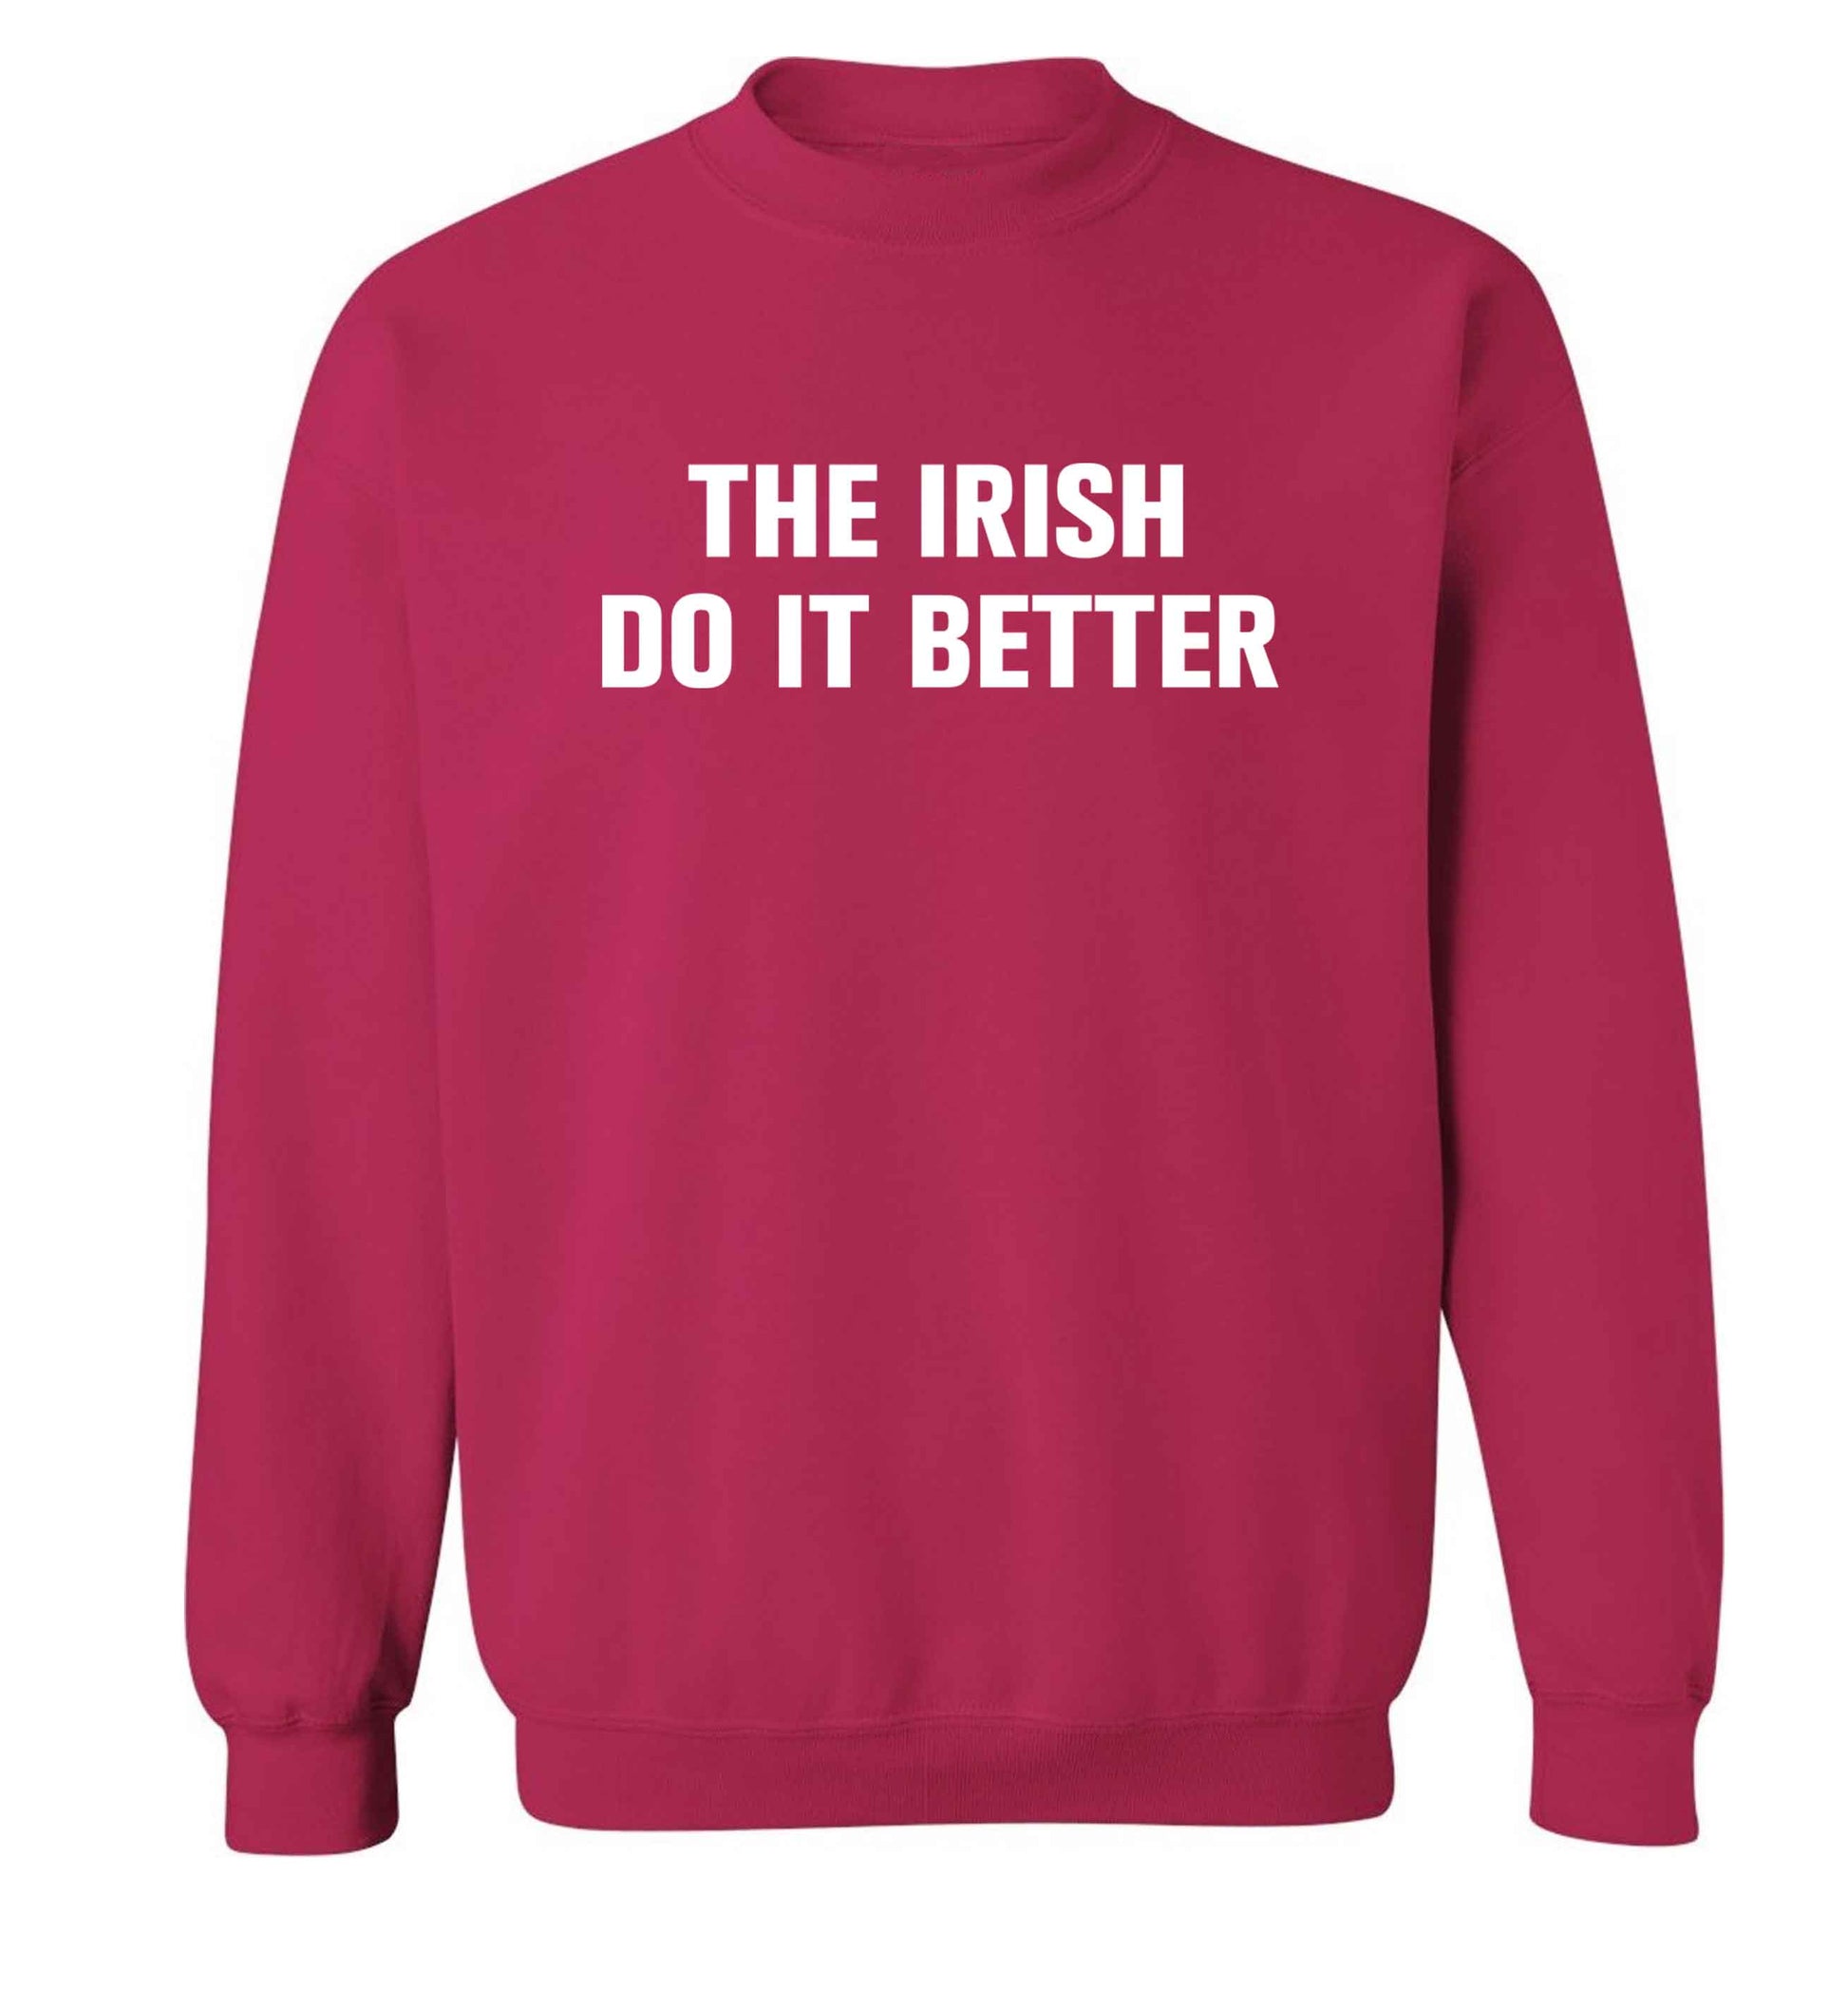 The Irish do it better adult's unisex pink sweater 2XL